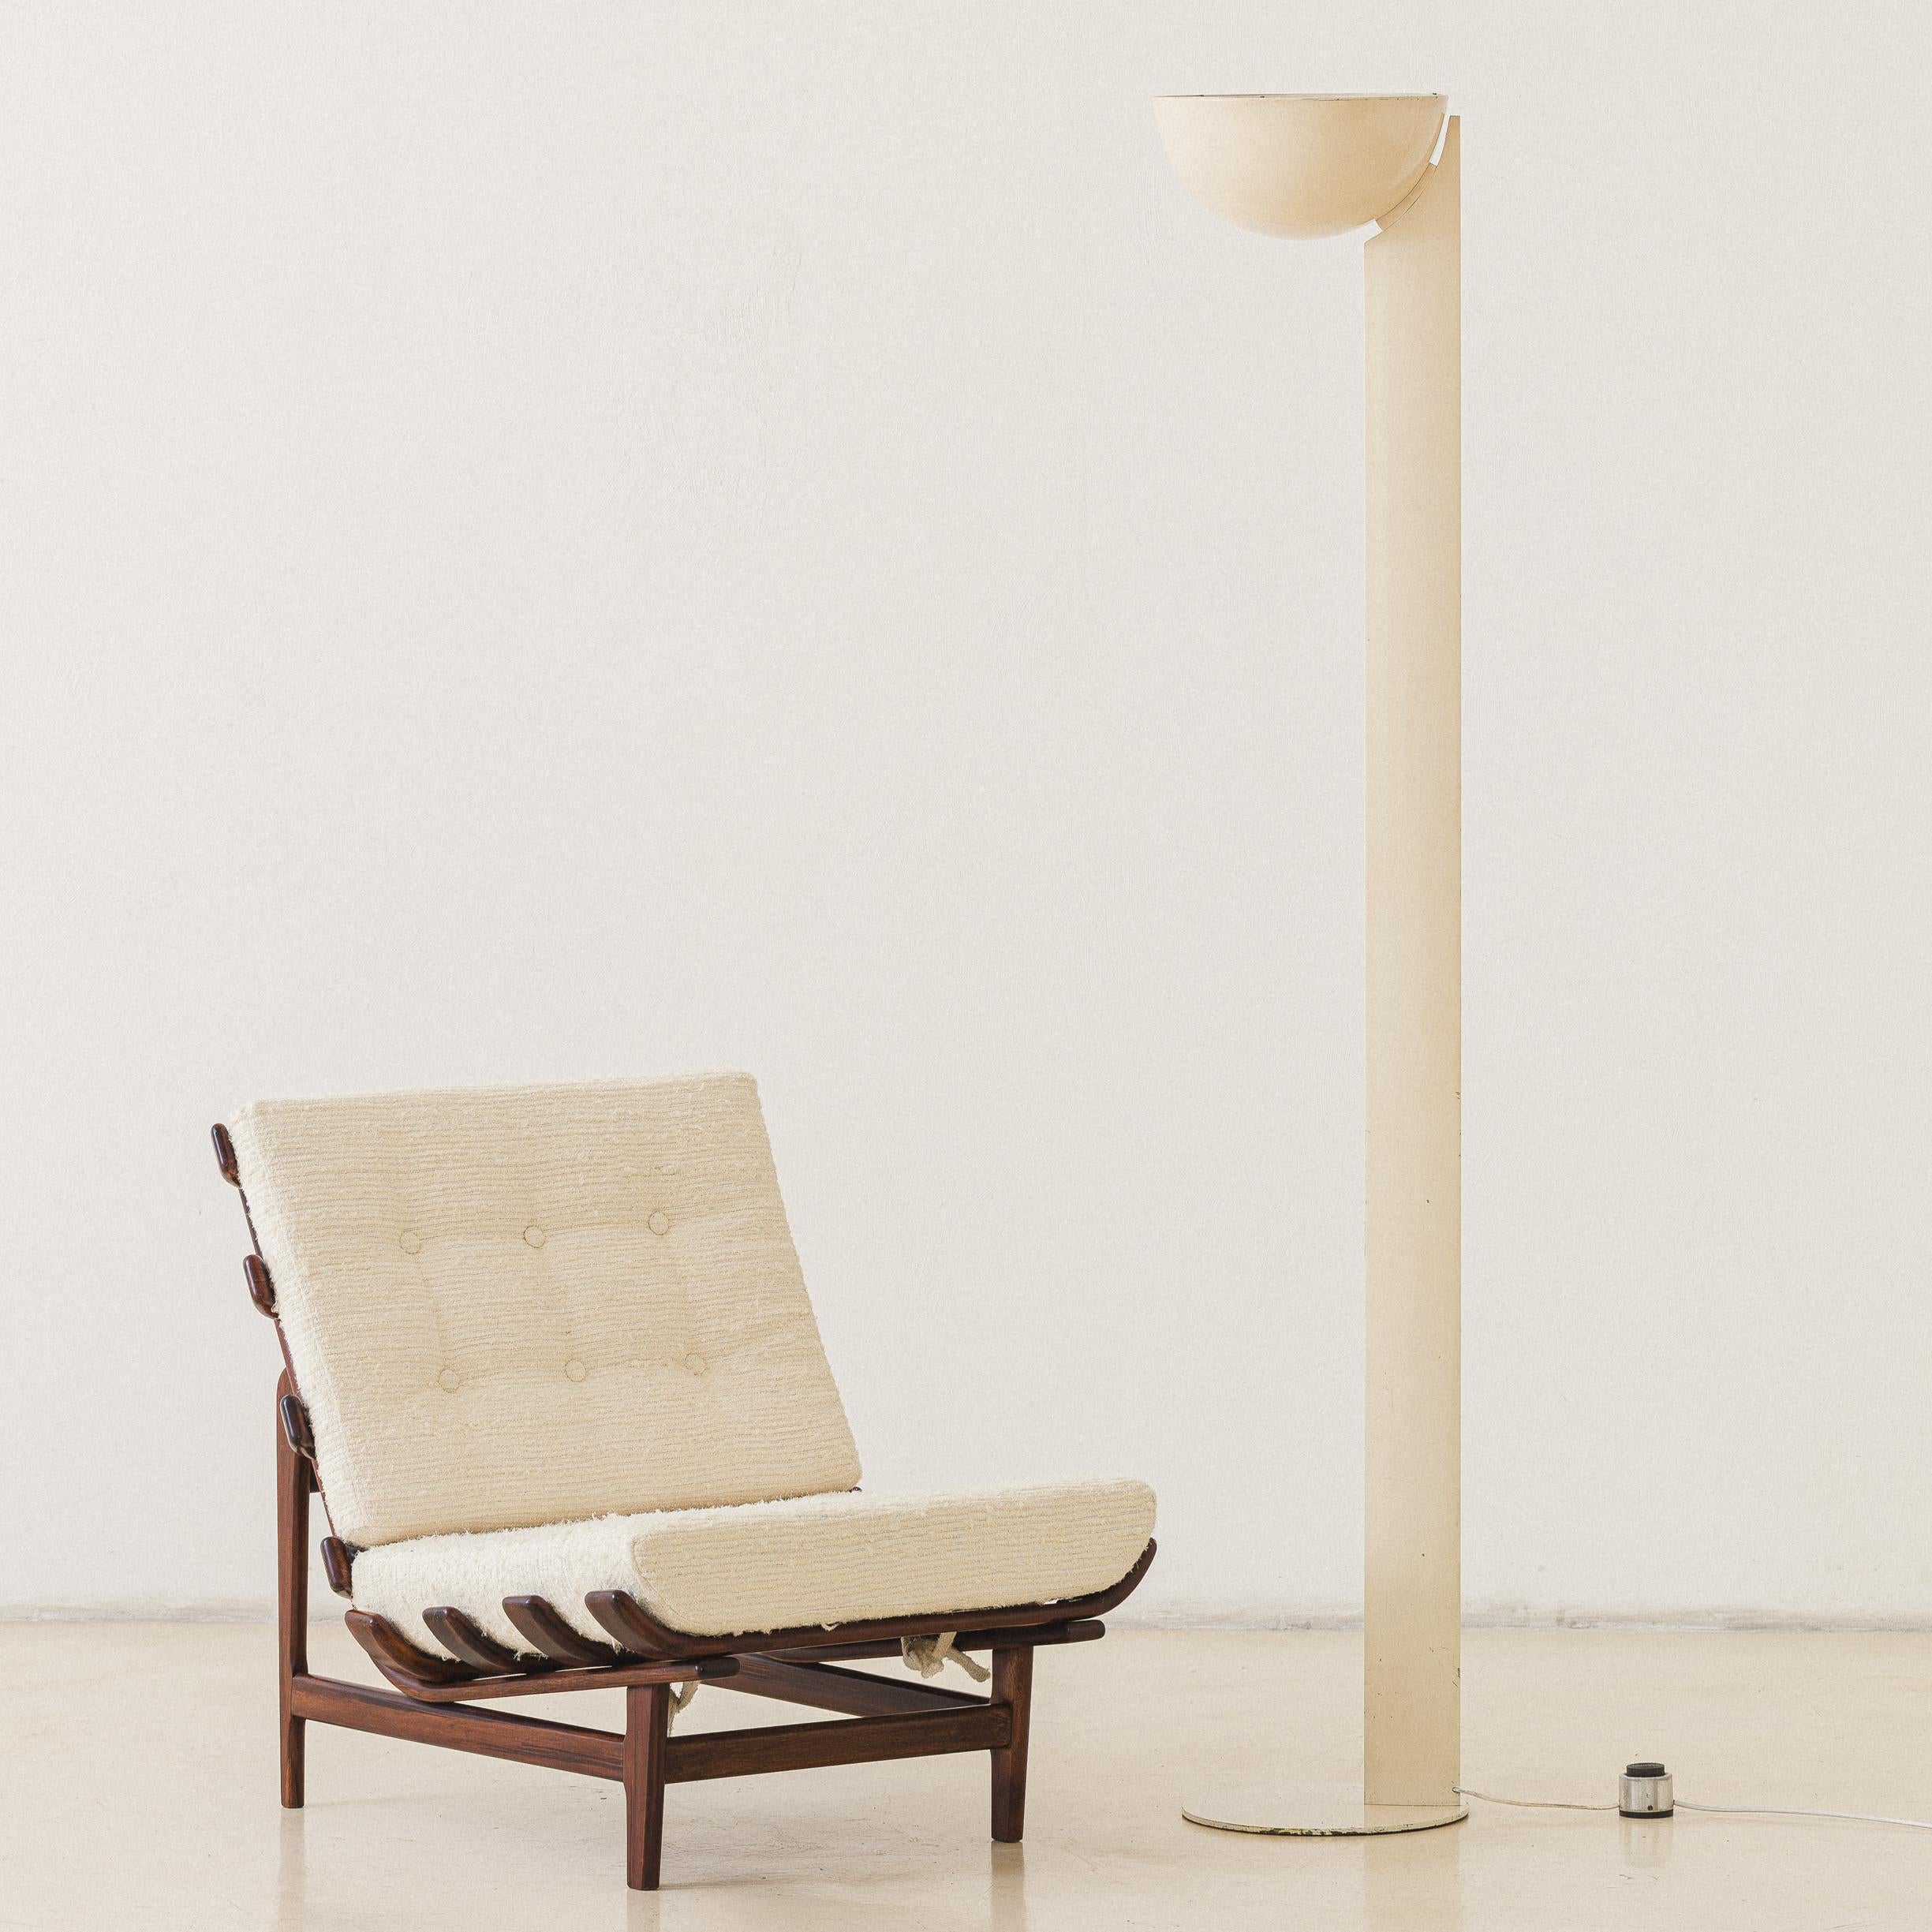 Dominici Floor Lamp, MidCentury Modern Brazilian Design by Enrico Furio, c.1950s For Sale 4